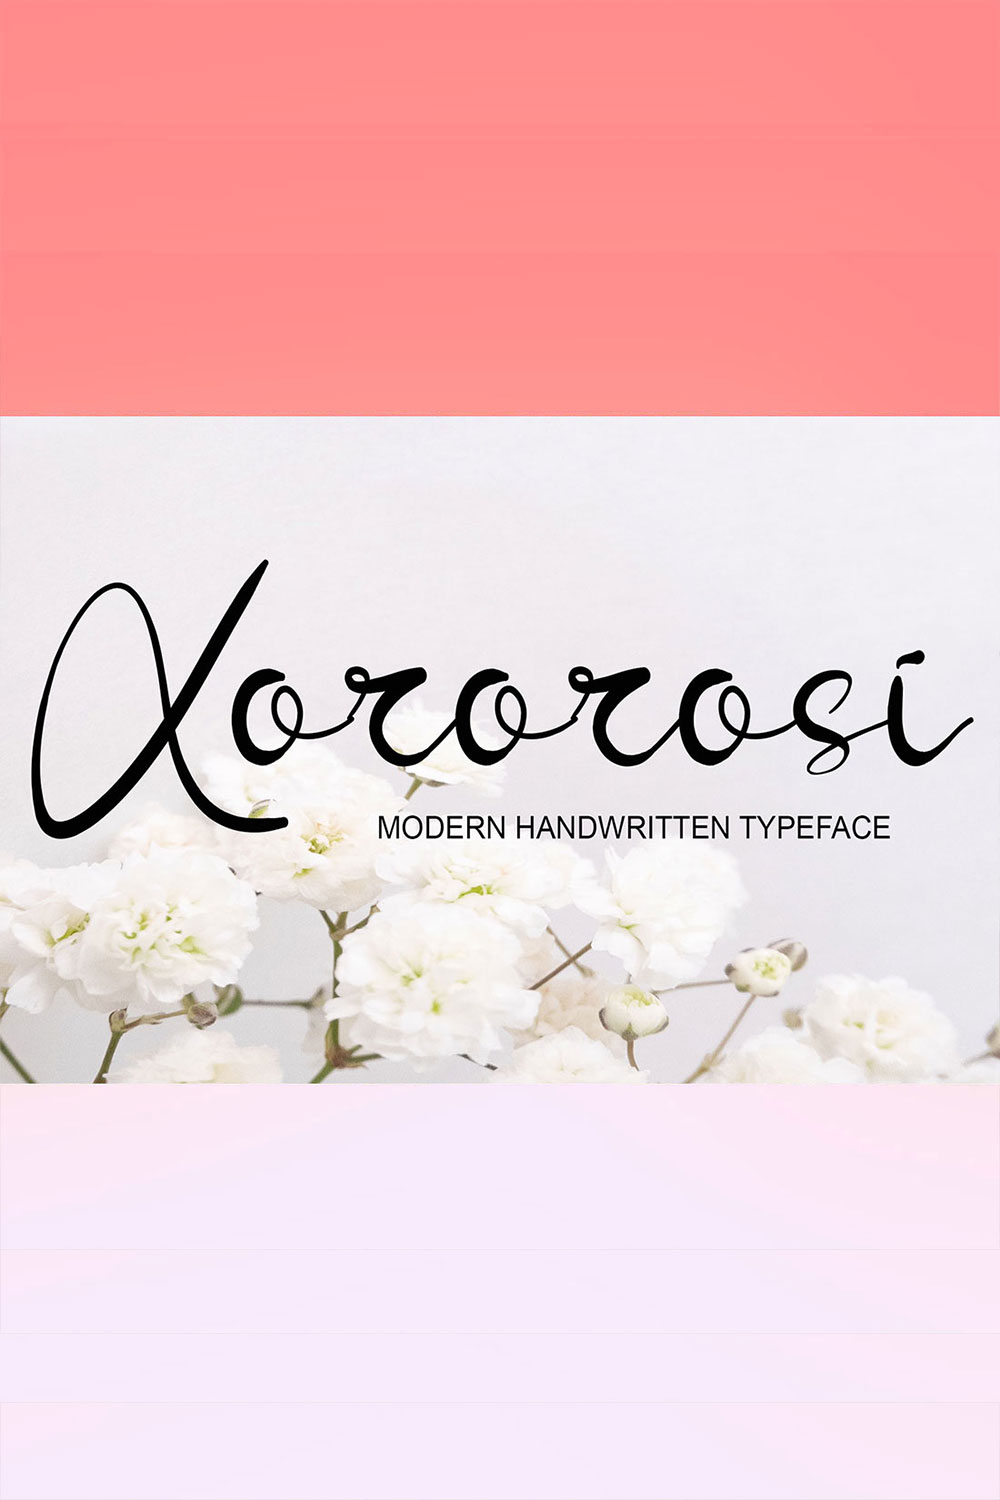 Xororosi-only$9 pinterest preview image.